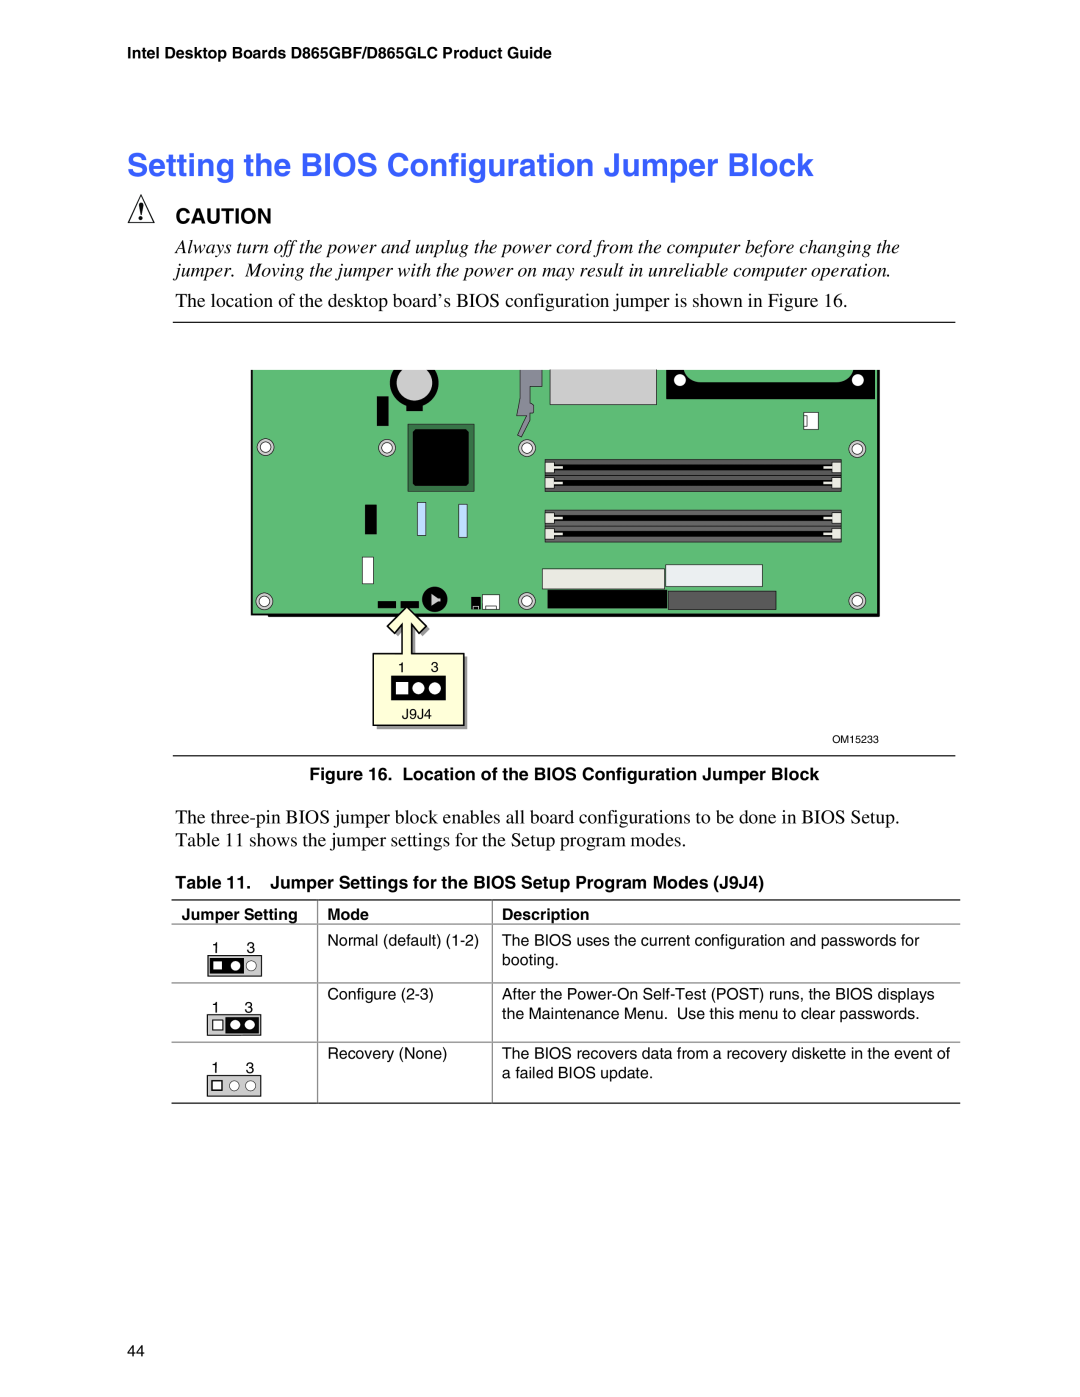 Intel D865GLC, D865GBF manual Setting the BIOS Configuration Jumper Block, Jumper Setting, Mode, Description 